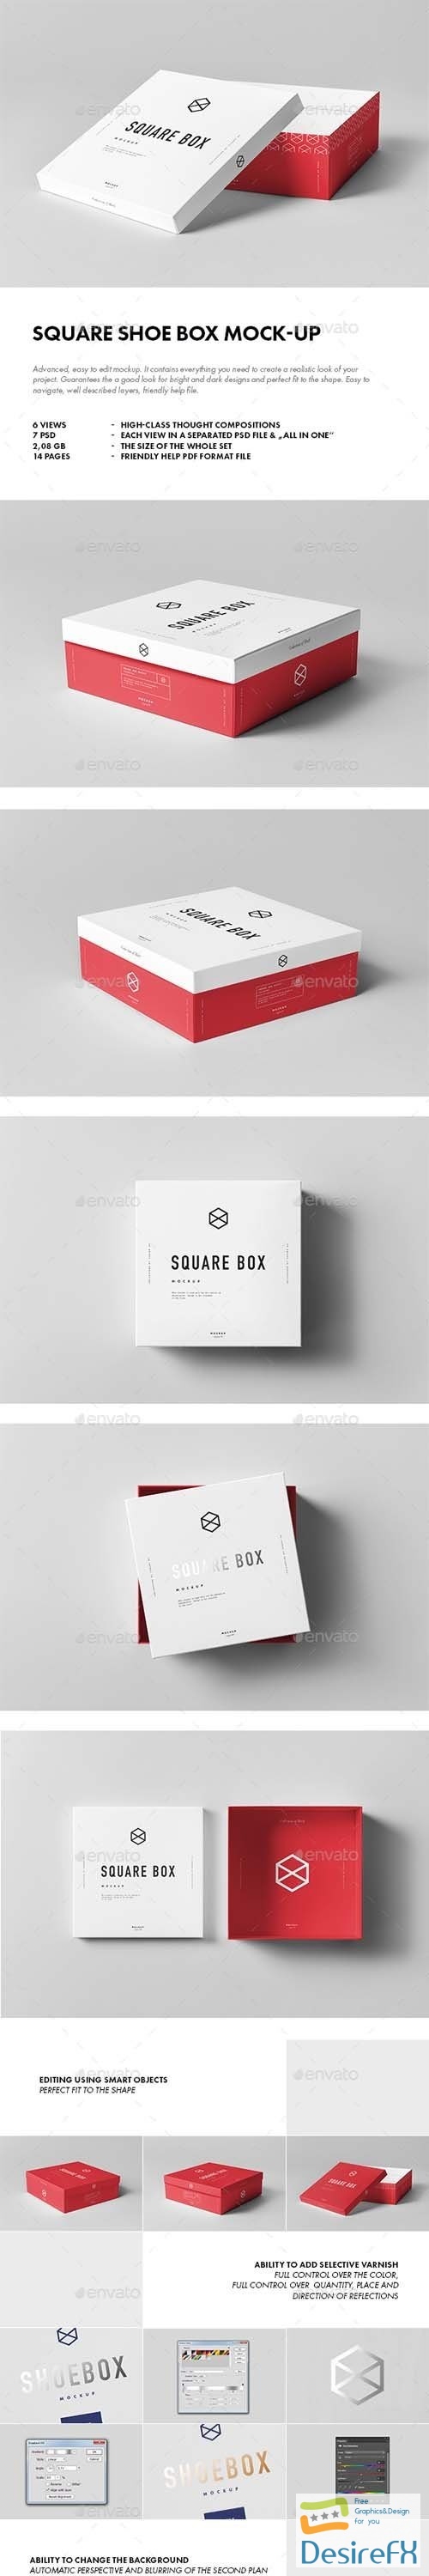 GR - Square Shoe Box Mock-up 19137172